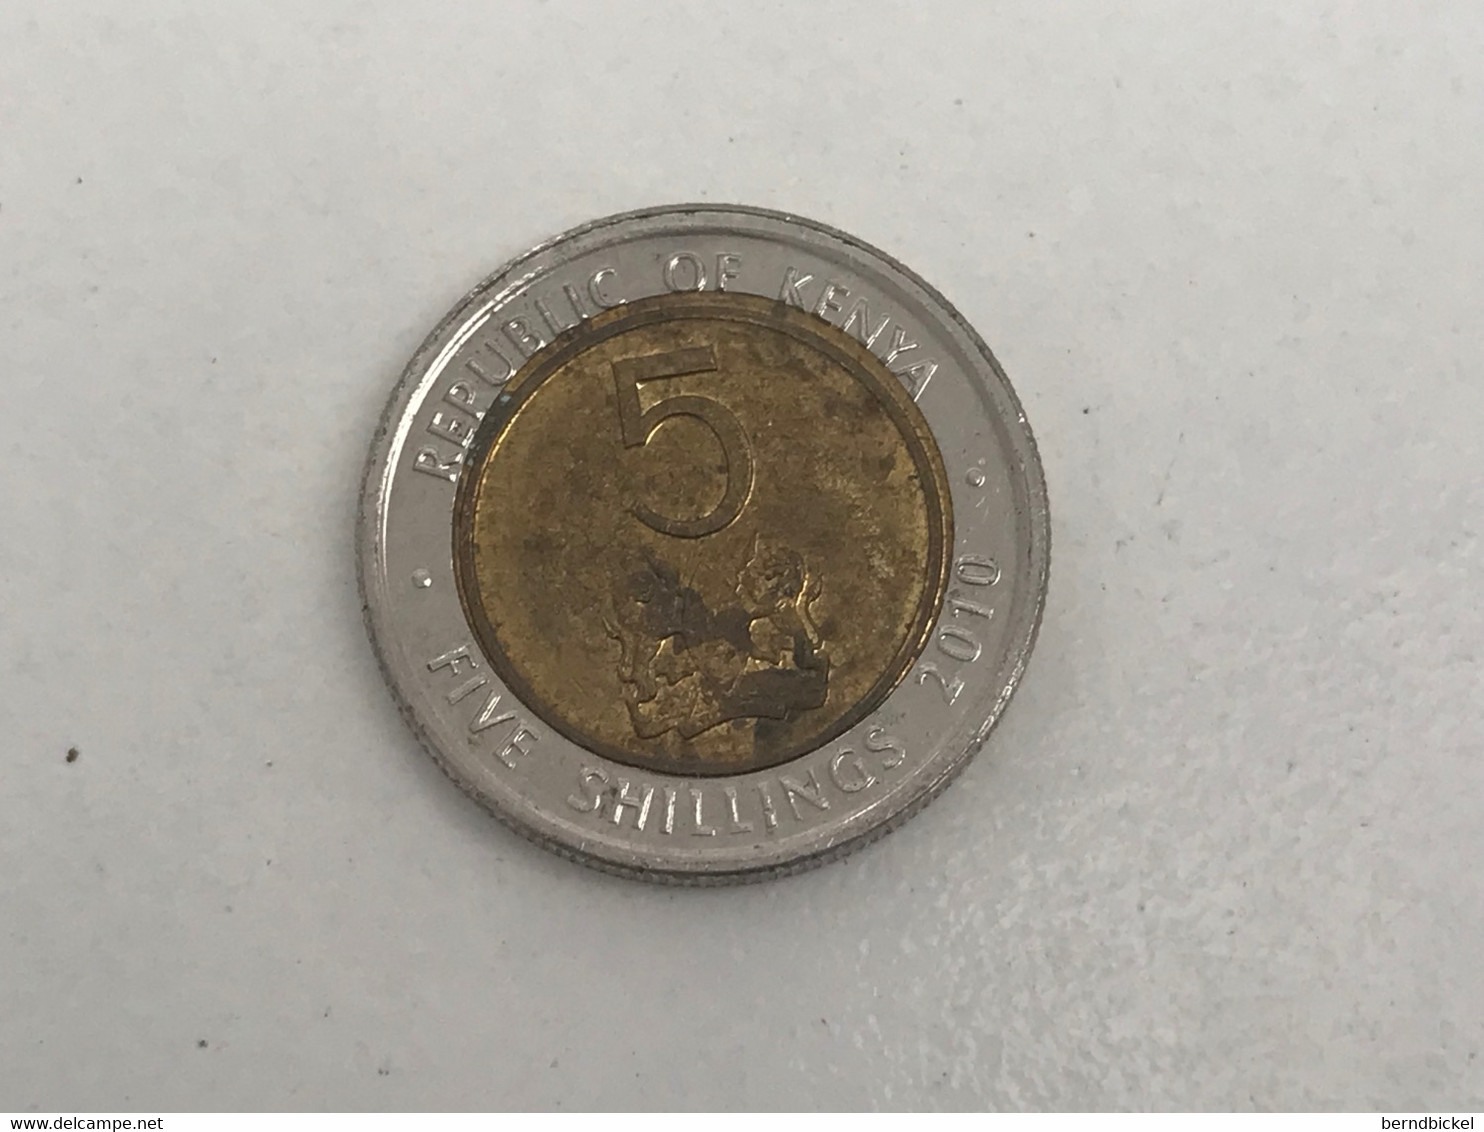 Münze Münzen Umlaufmünze Kenia 5 Shilling 2010 - Kenya